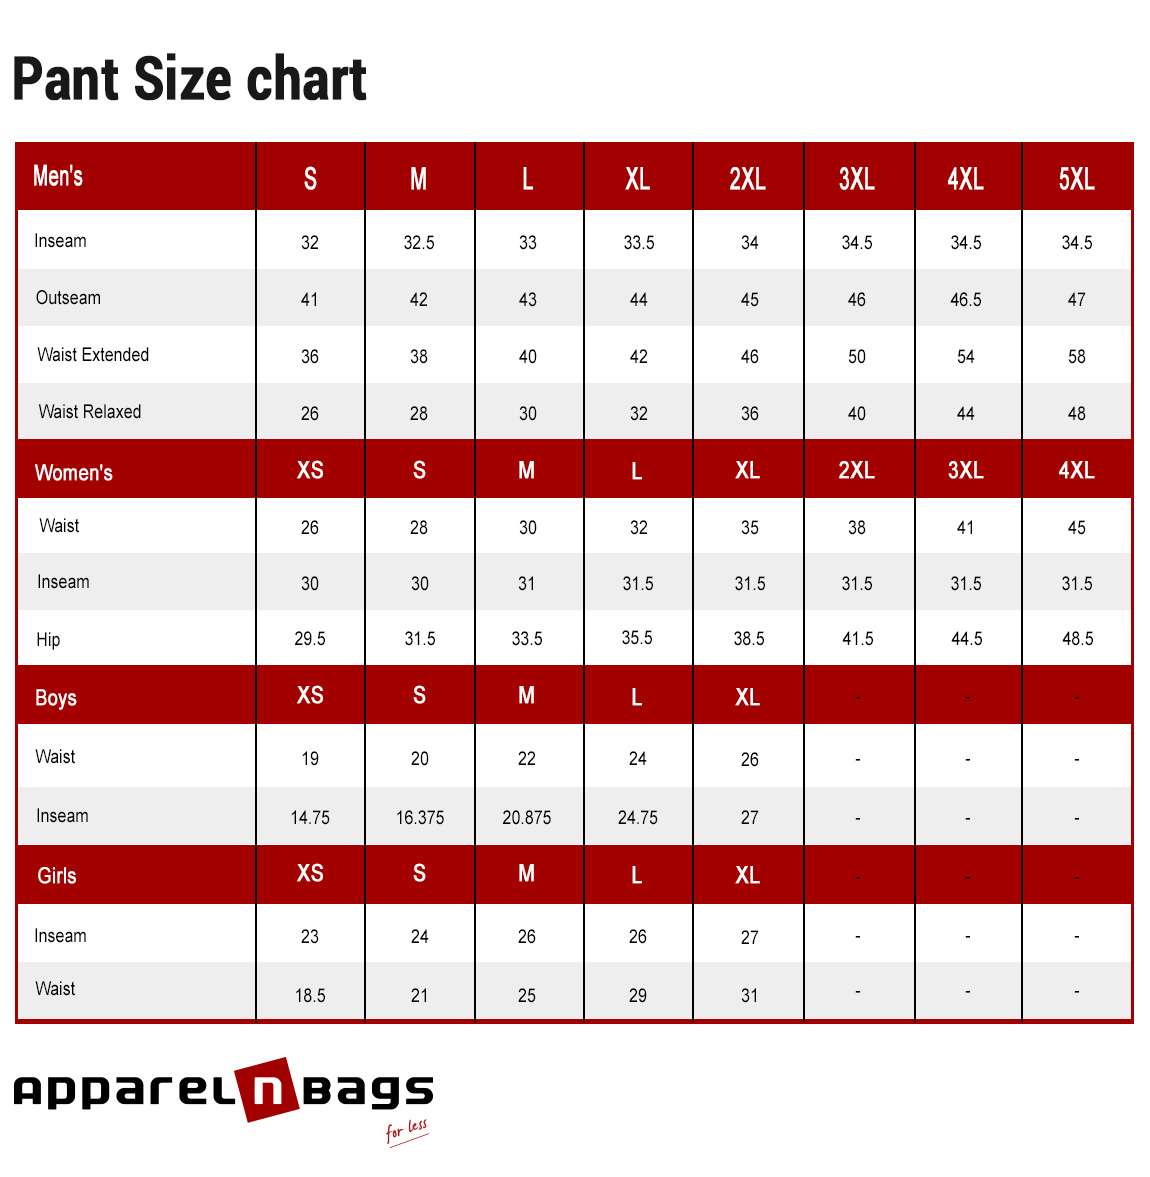 Pant Size Chart | ApparelnBags.com